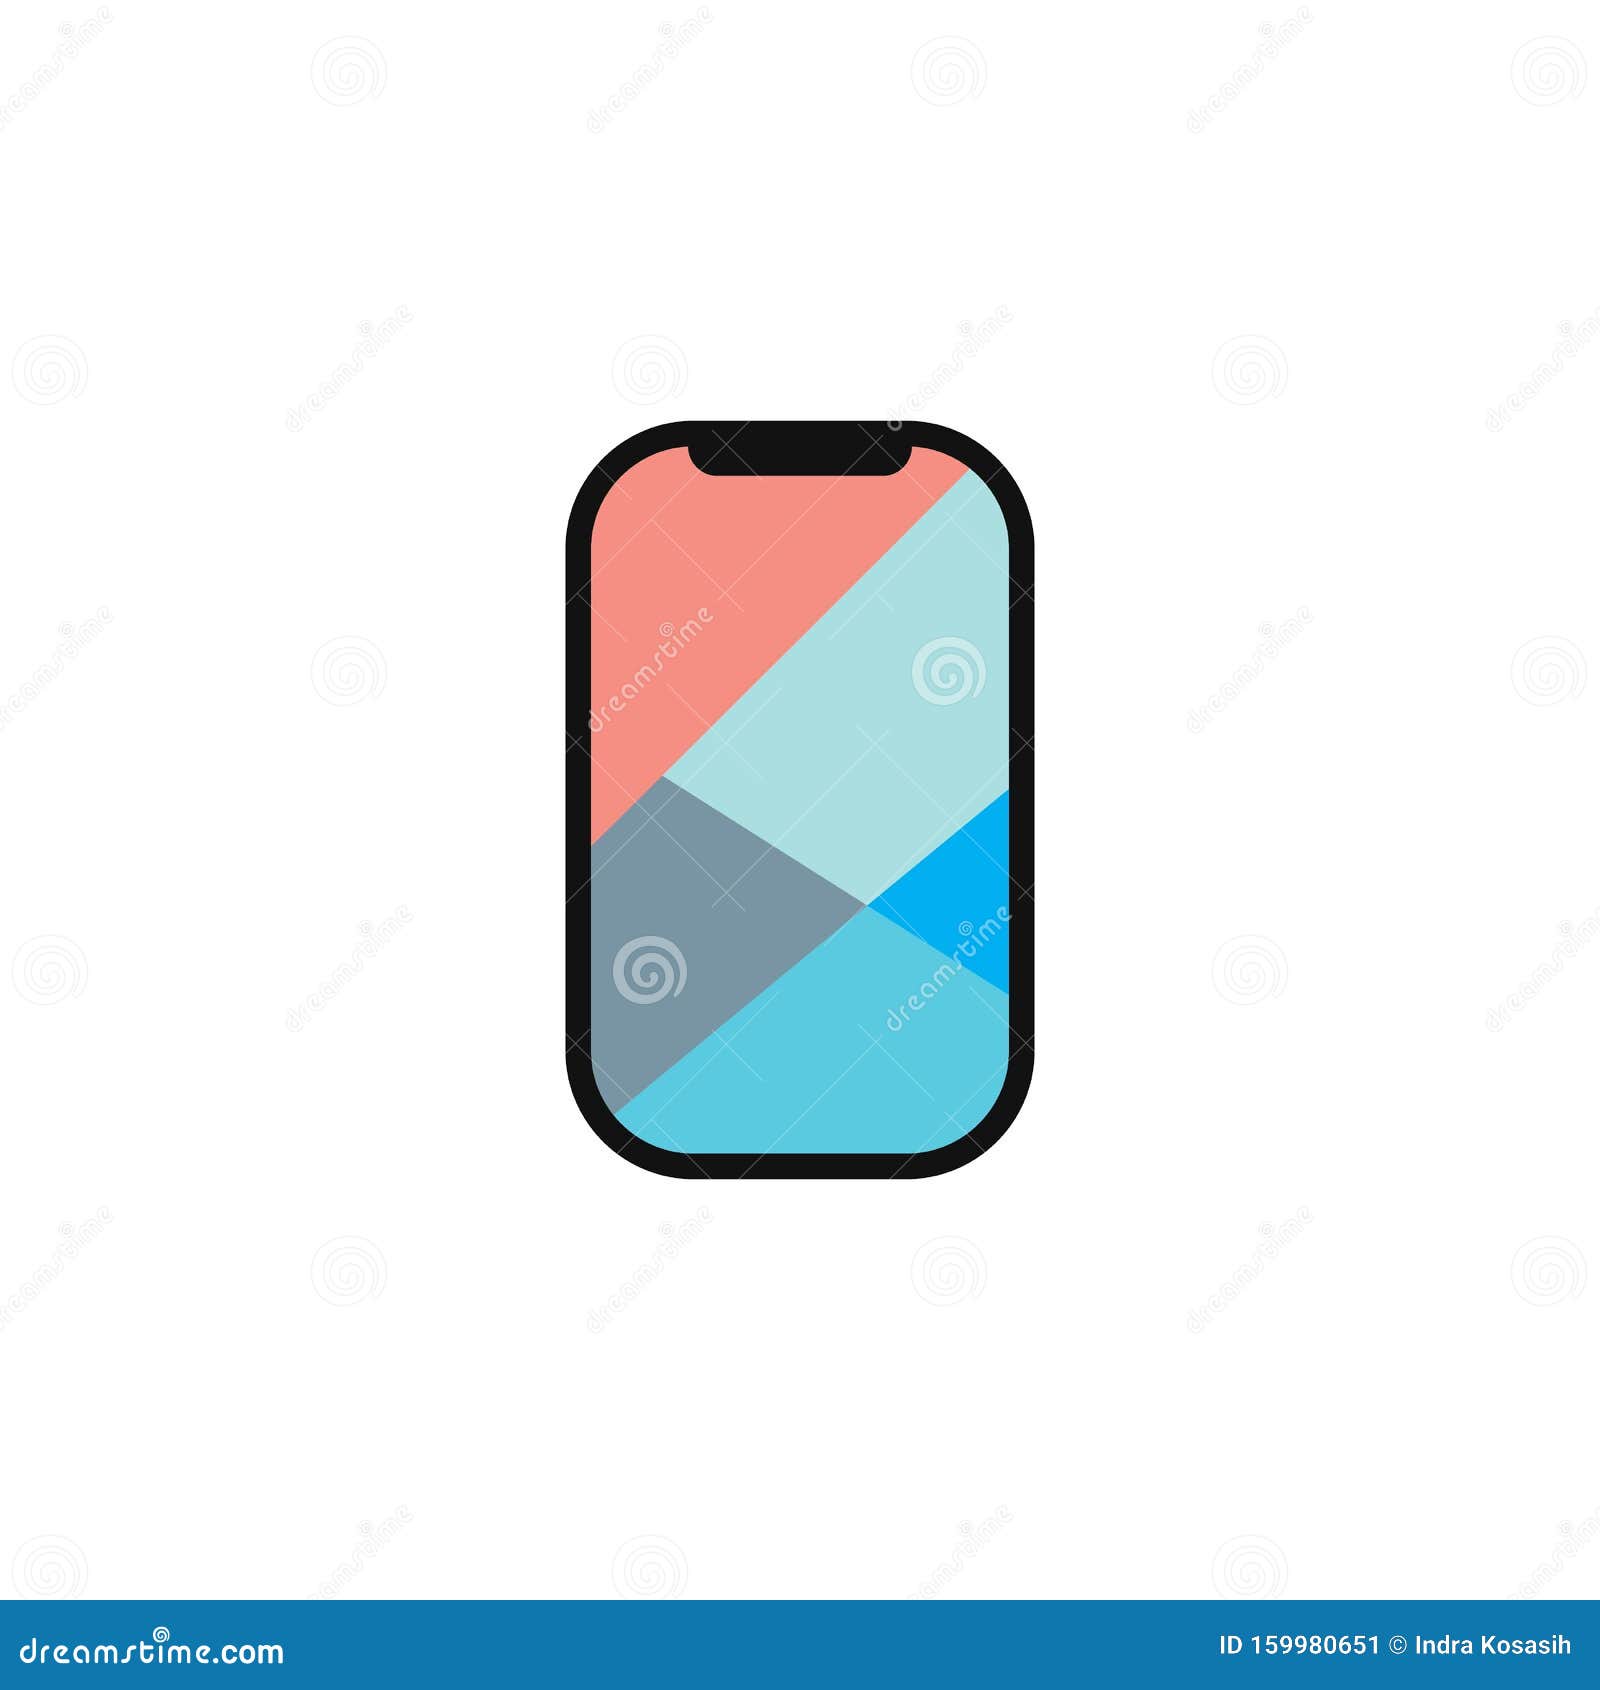 Simple Handphone Gadget Logo Technology Vector Icon Illustration Stock Vector Illustration Of Digital Device